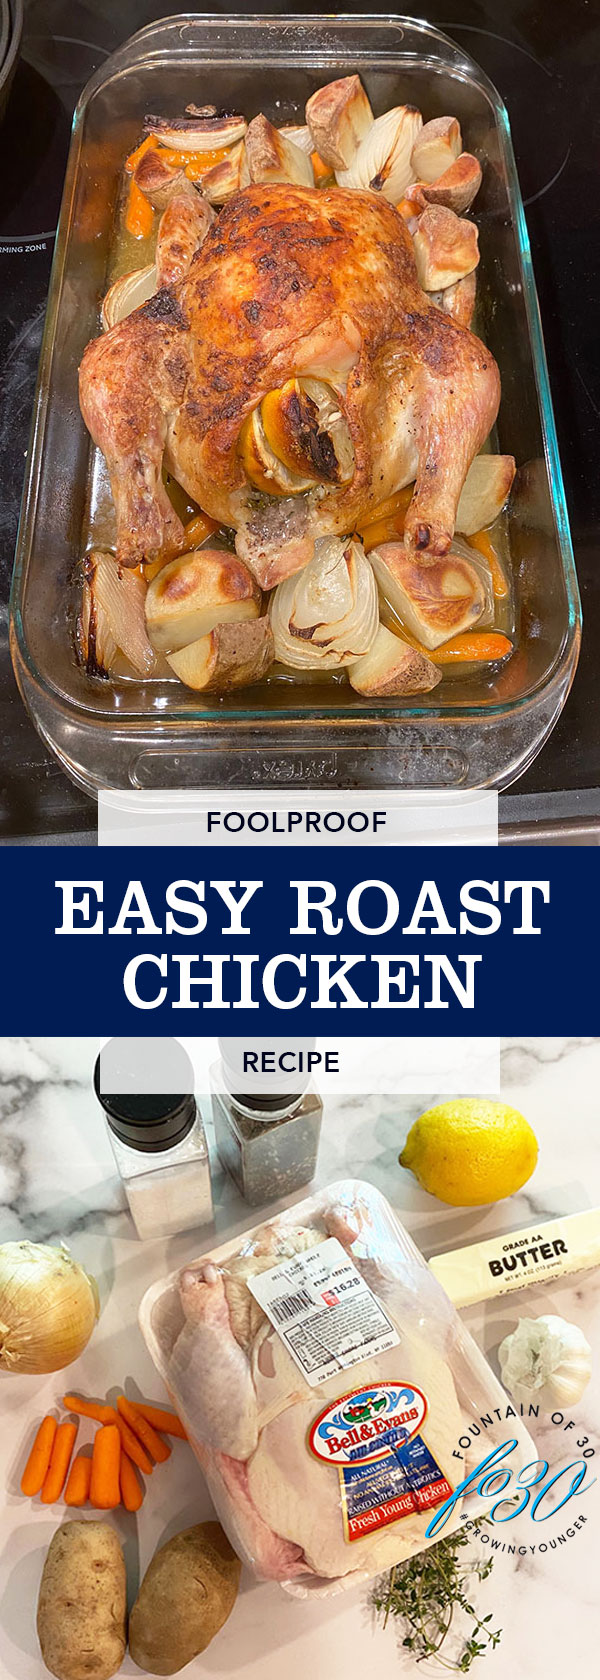 easy roast chicken recipe fountainof30